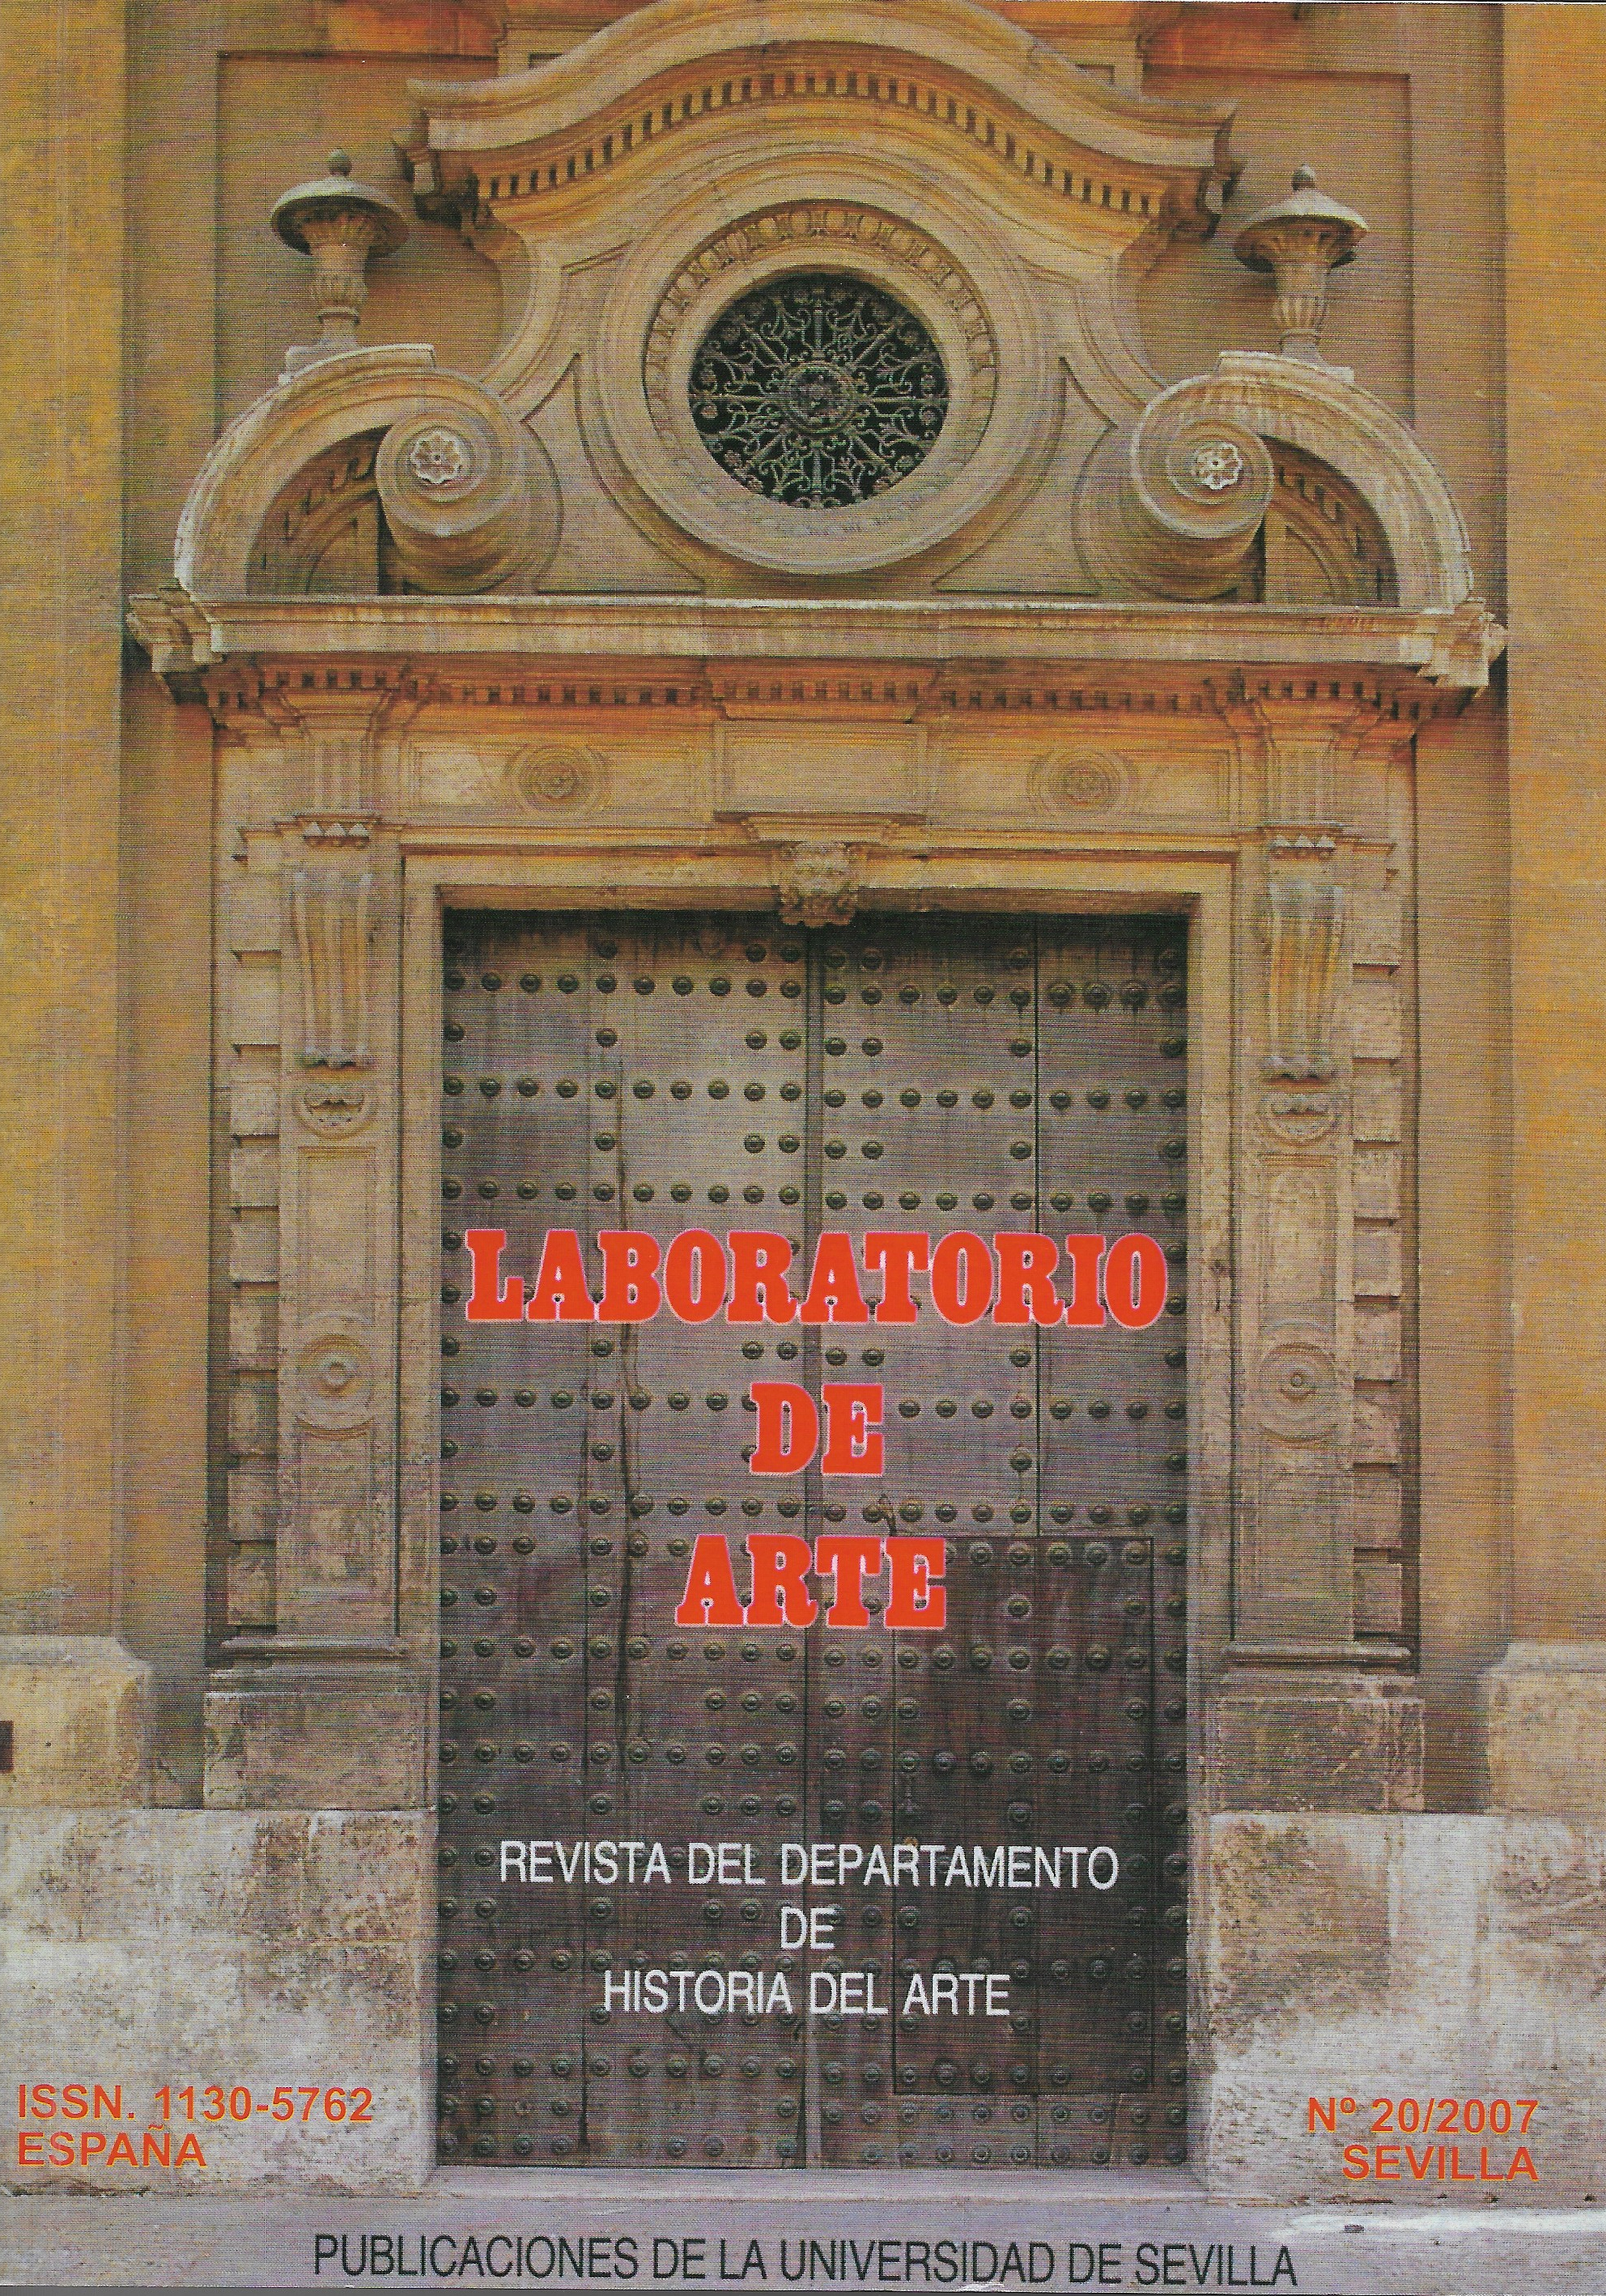 					Ver Núm. 20 (2007): LABORATORIO DE ARTE
				